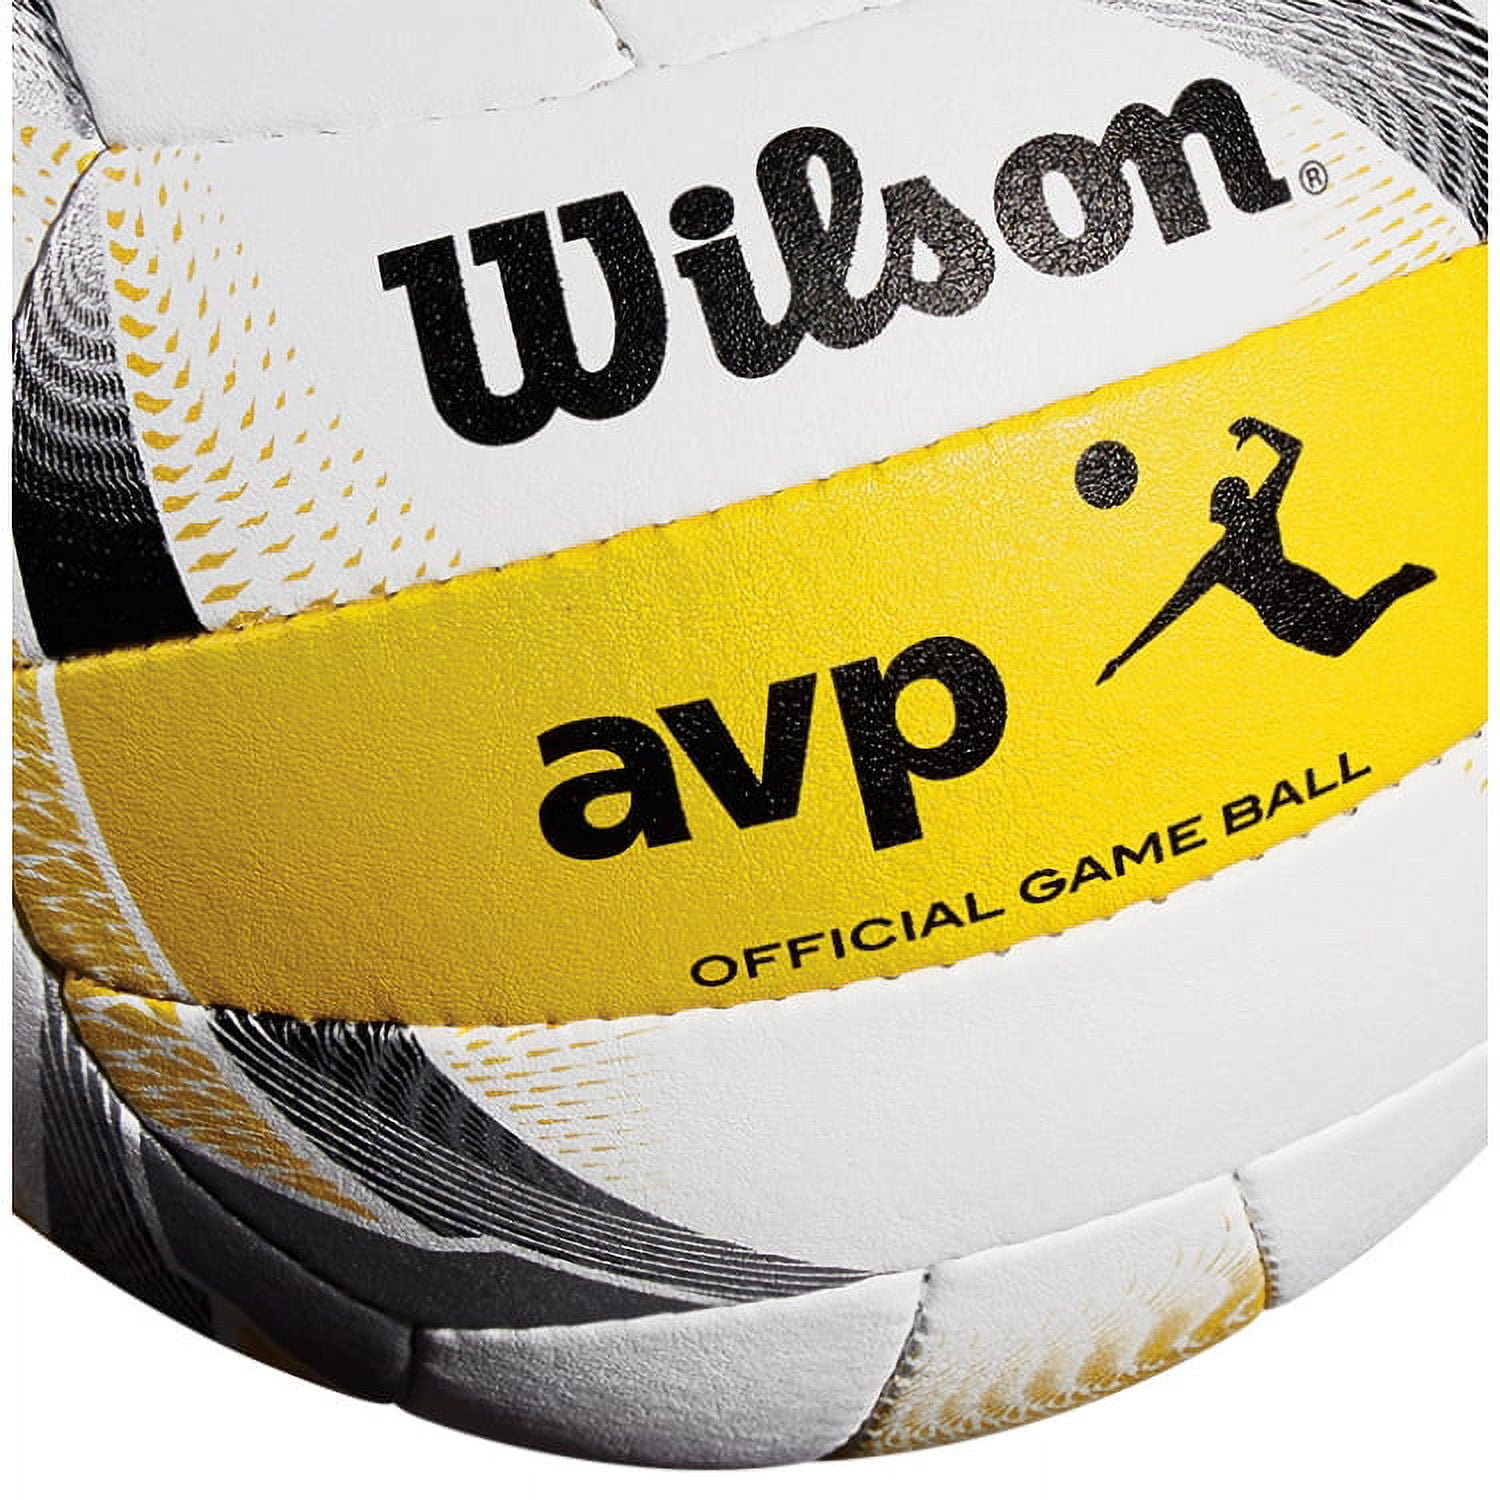 Pro Game Official Beach of Ball Volleyball Wilson AVP Tour